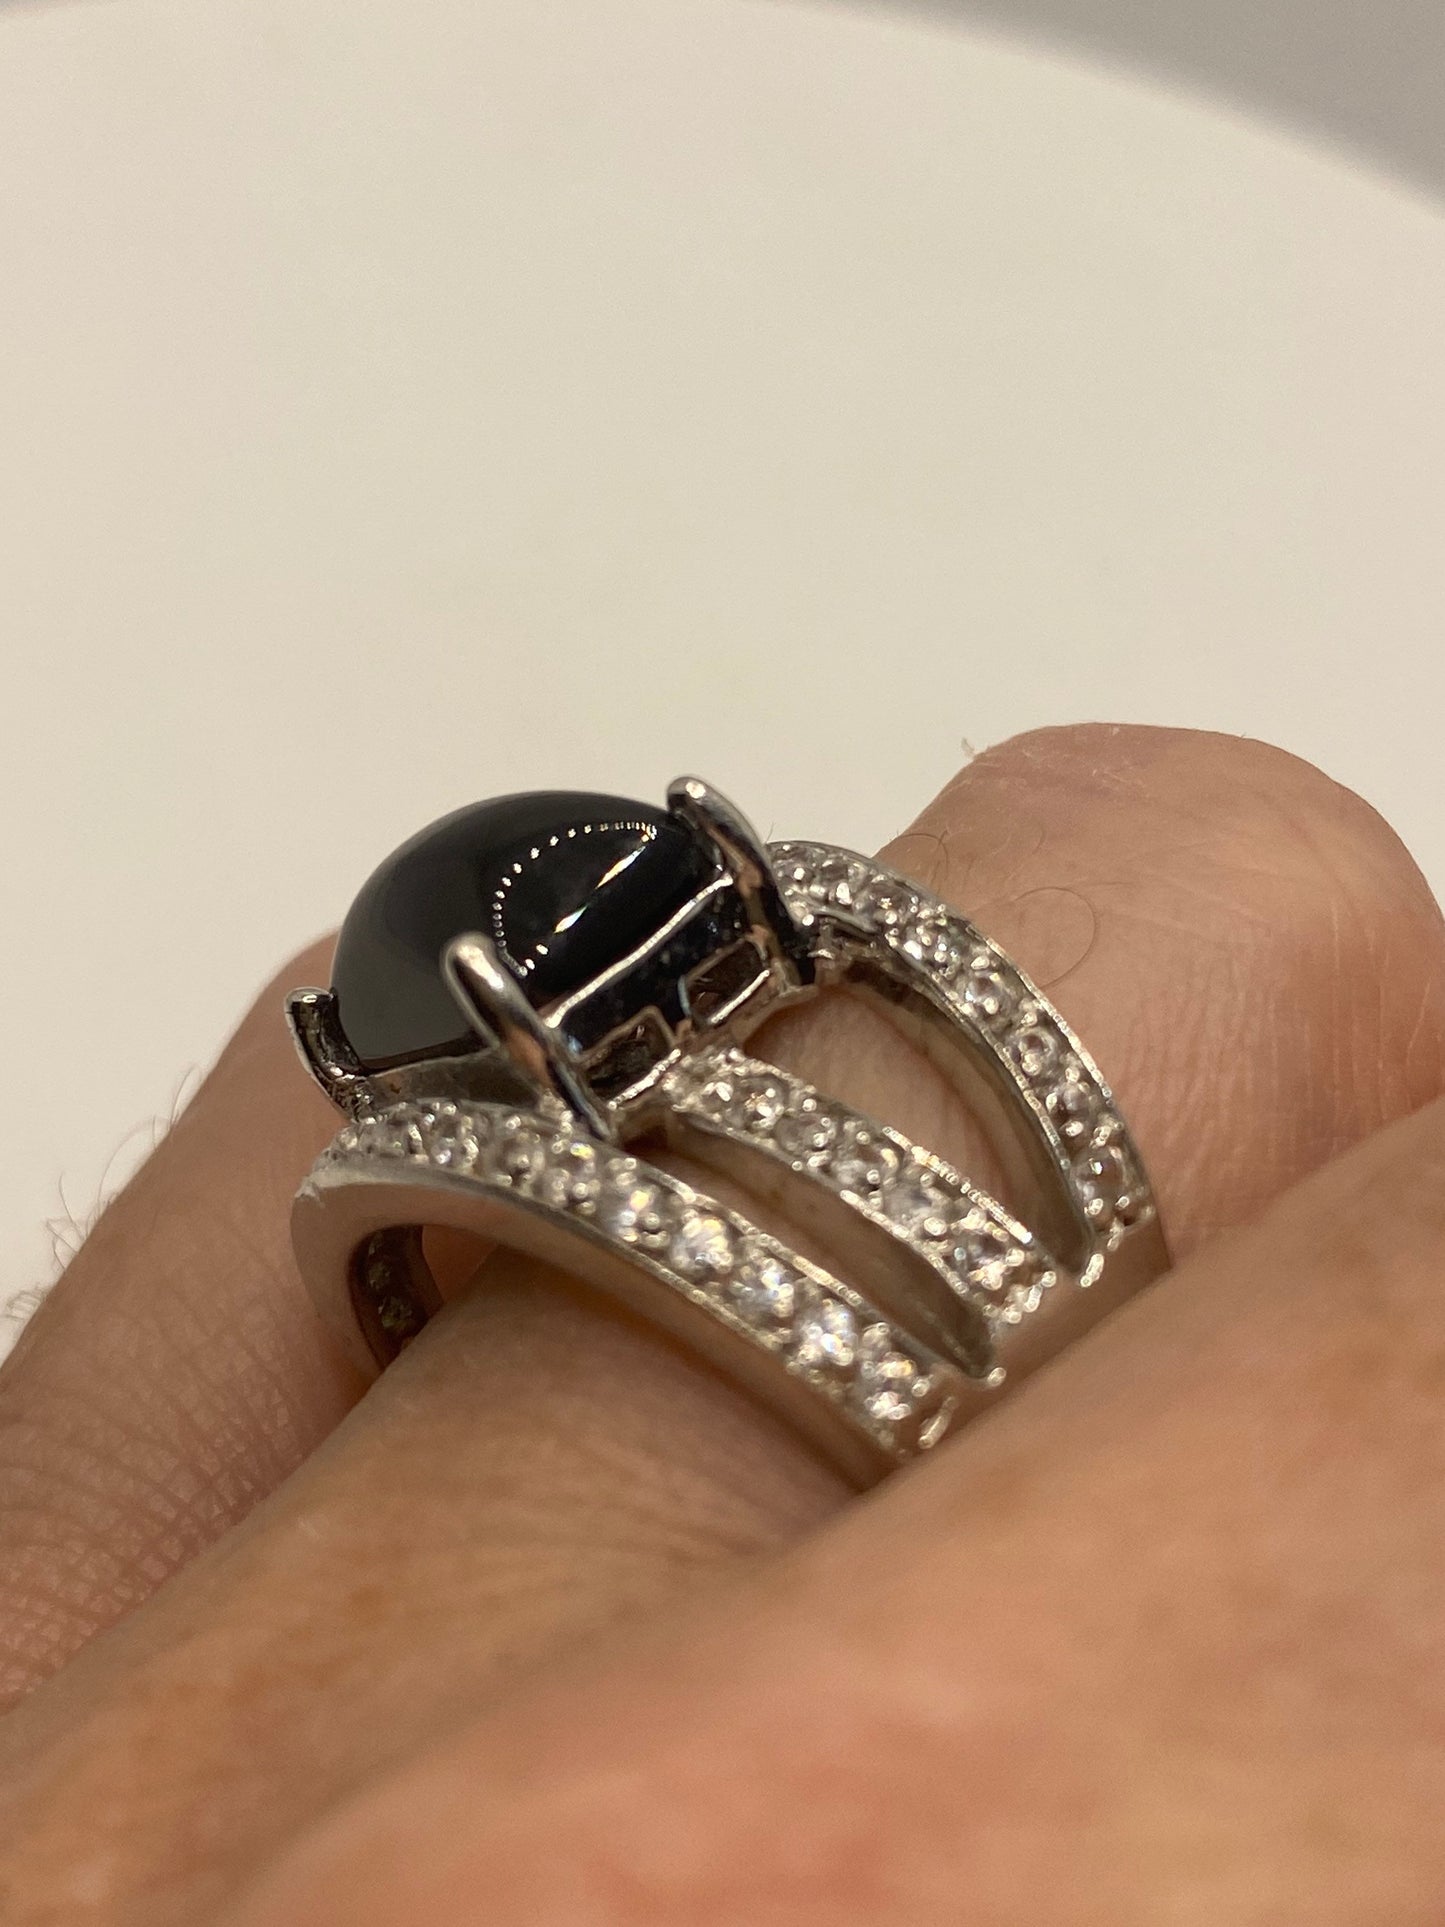 Vintage Black Onyx 925 Sterling Silver Ring